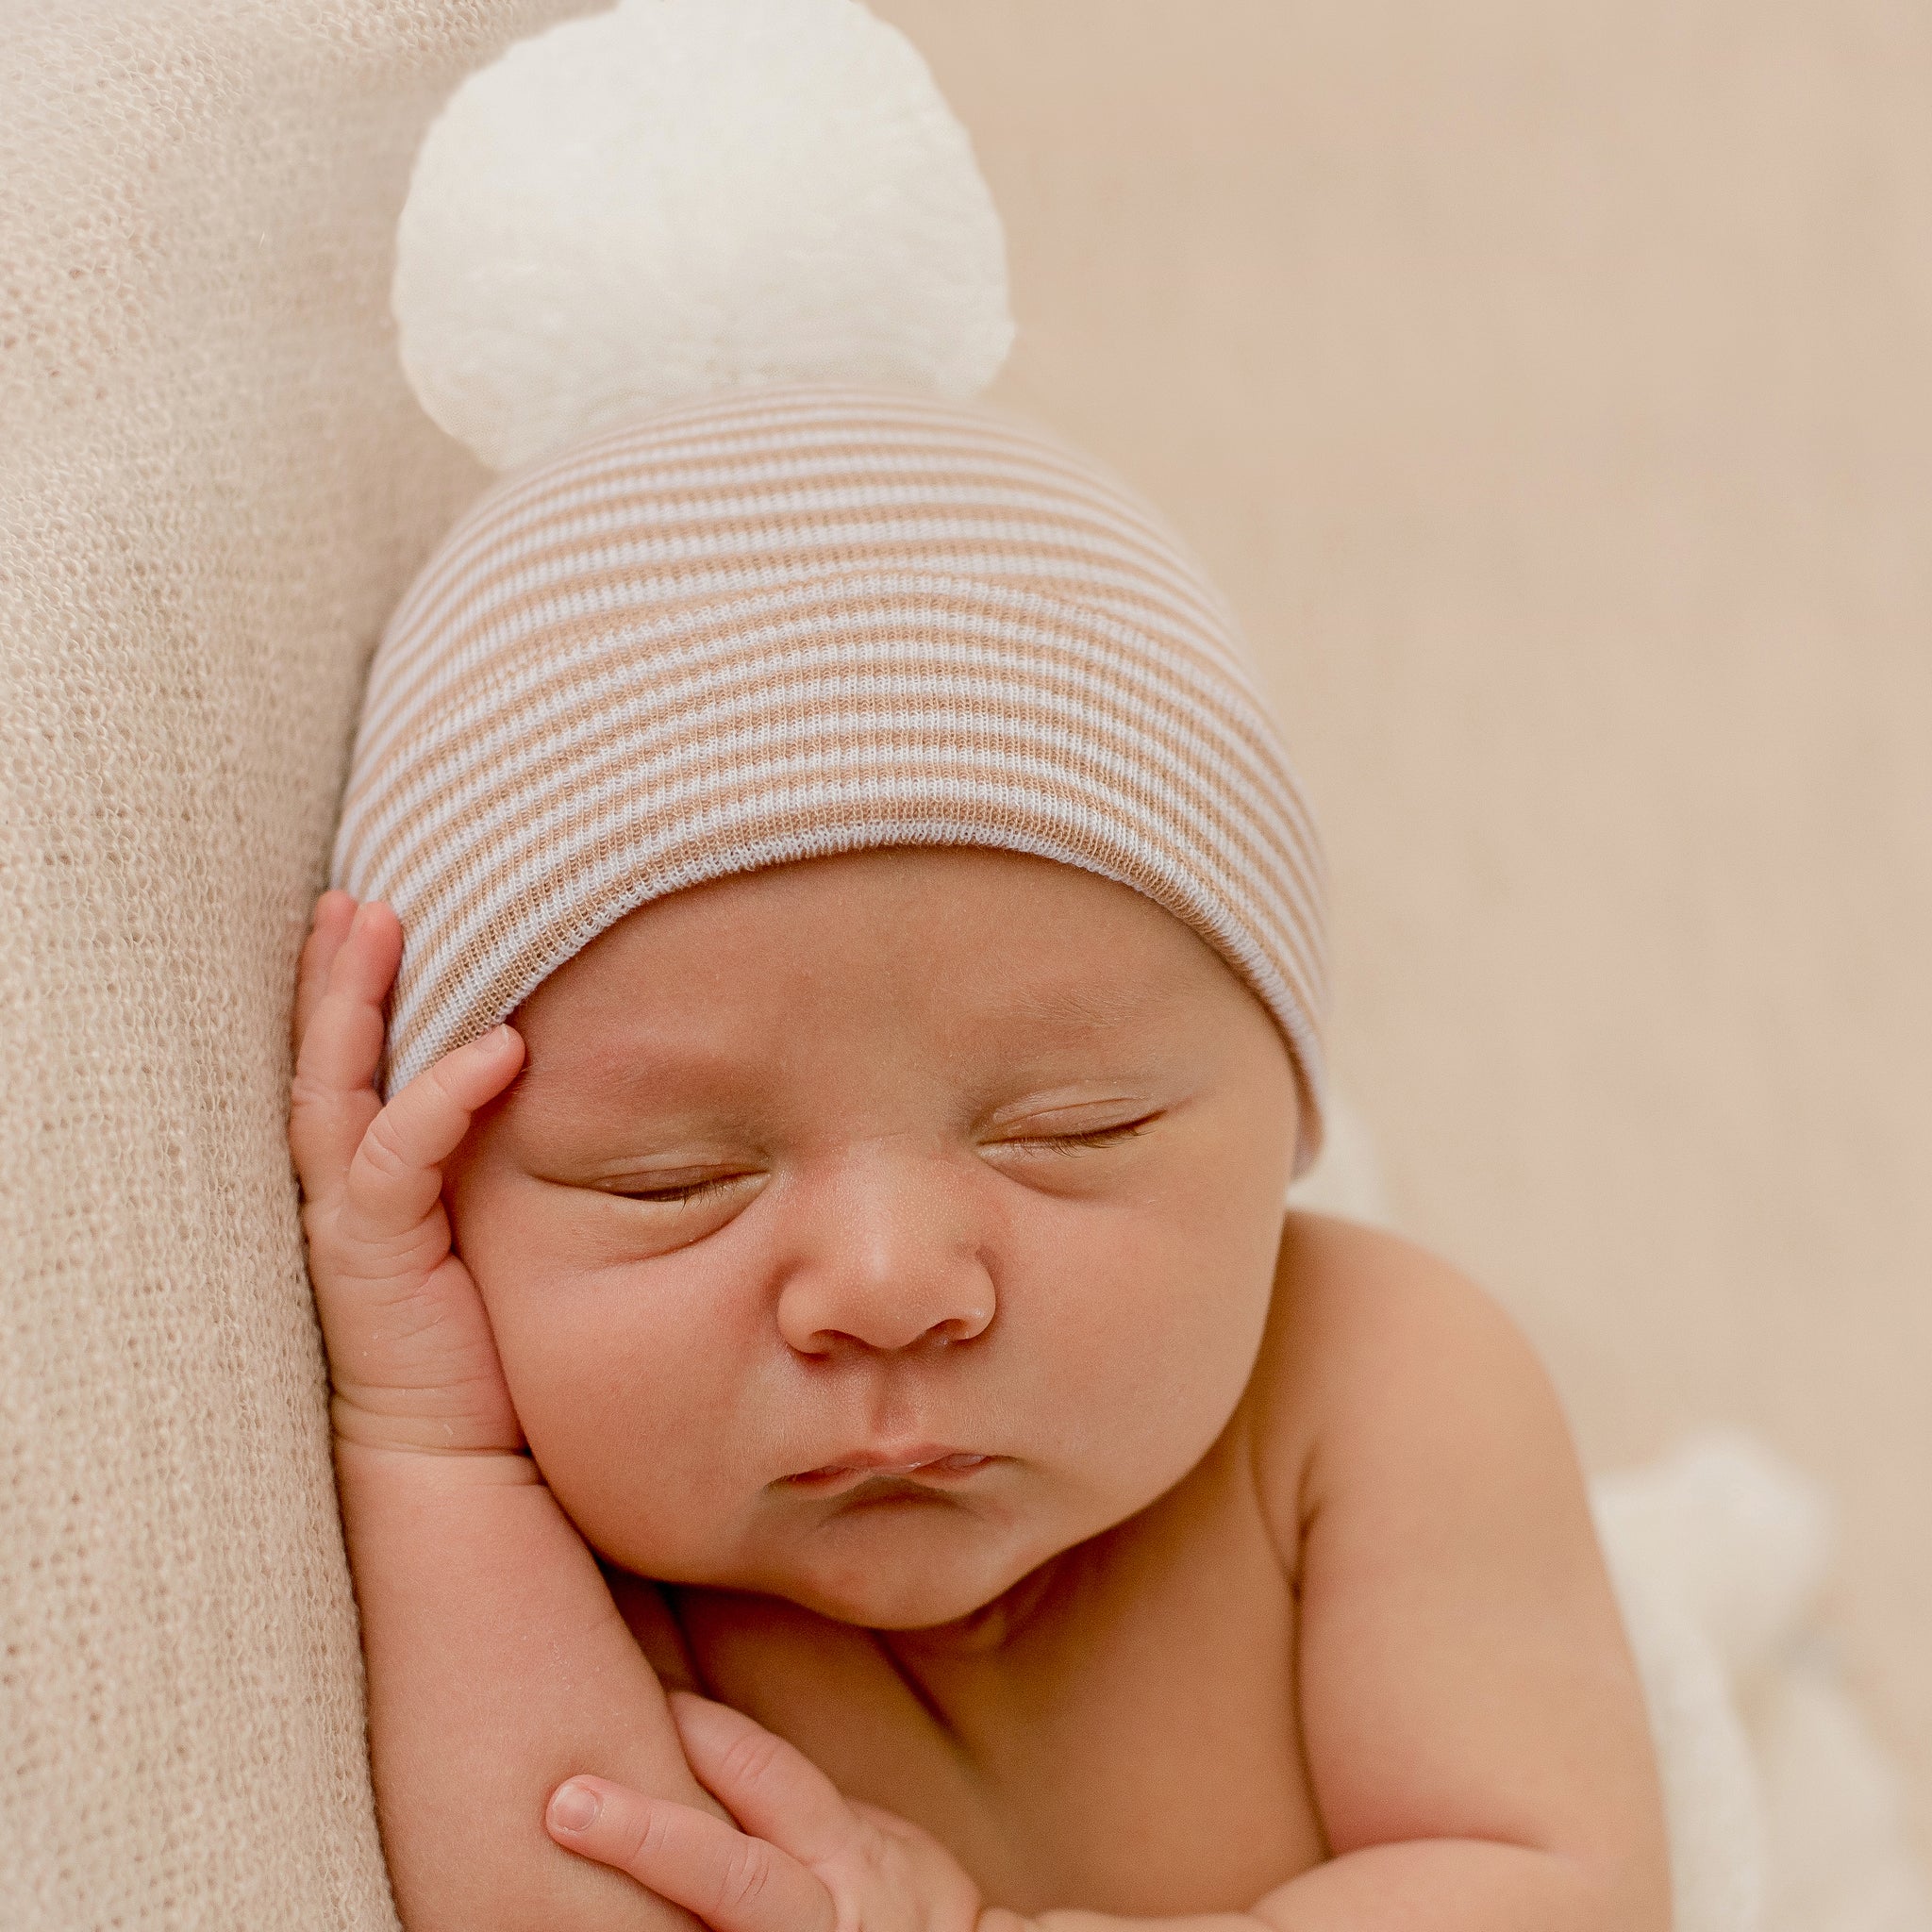 ilybean Tan and White Striped White Pom Pom Newborn Hospital Hat